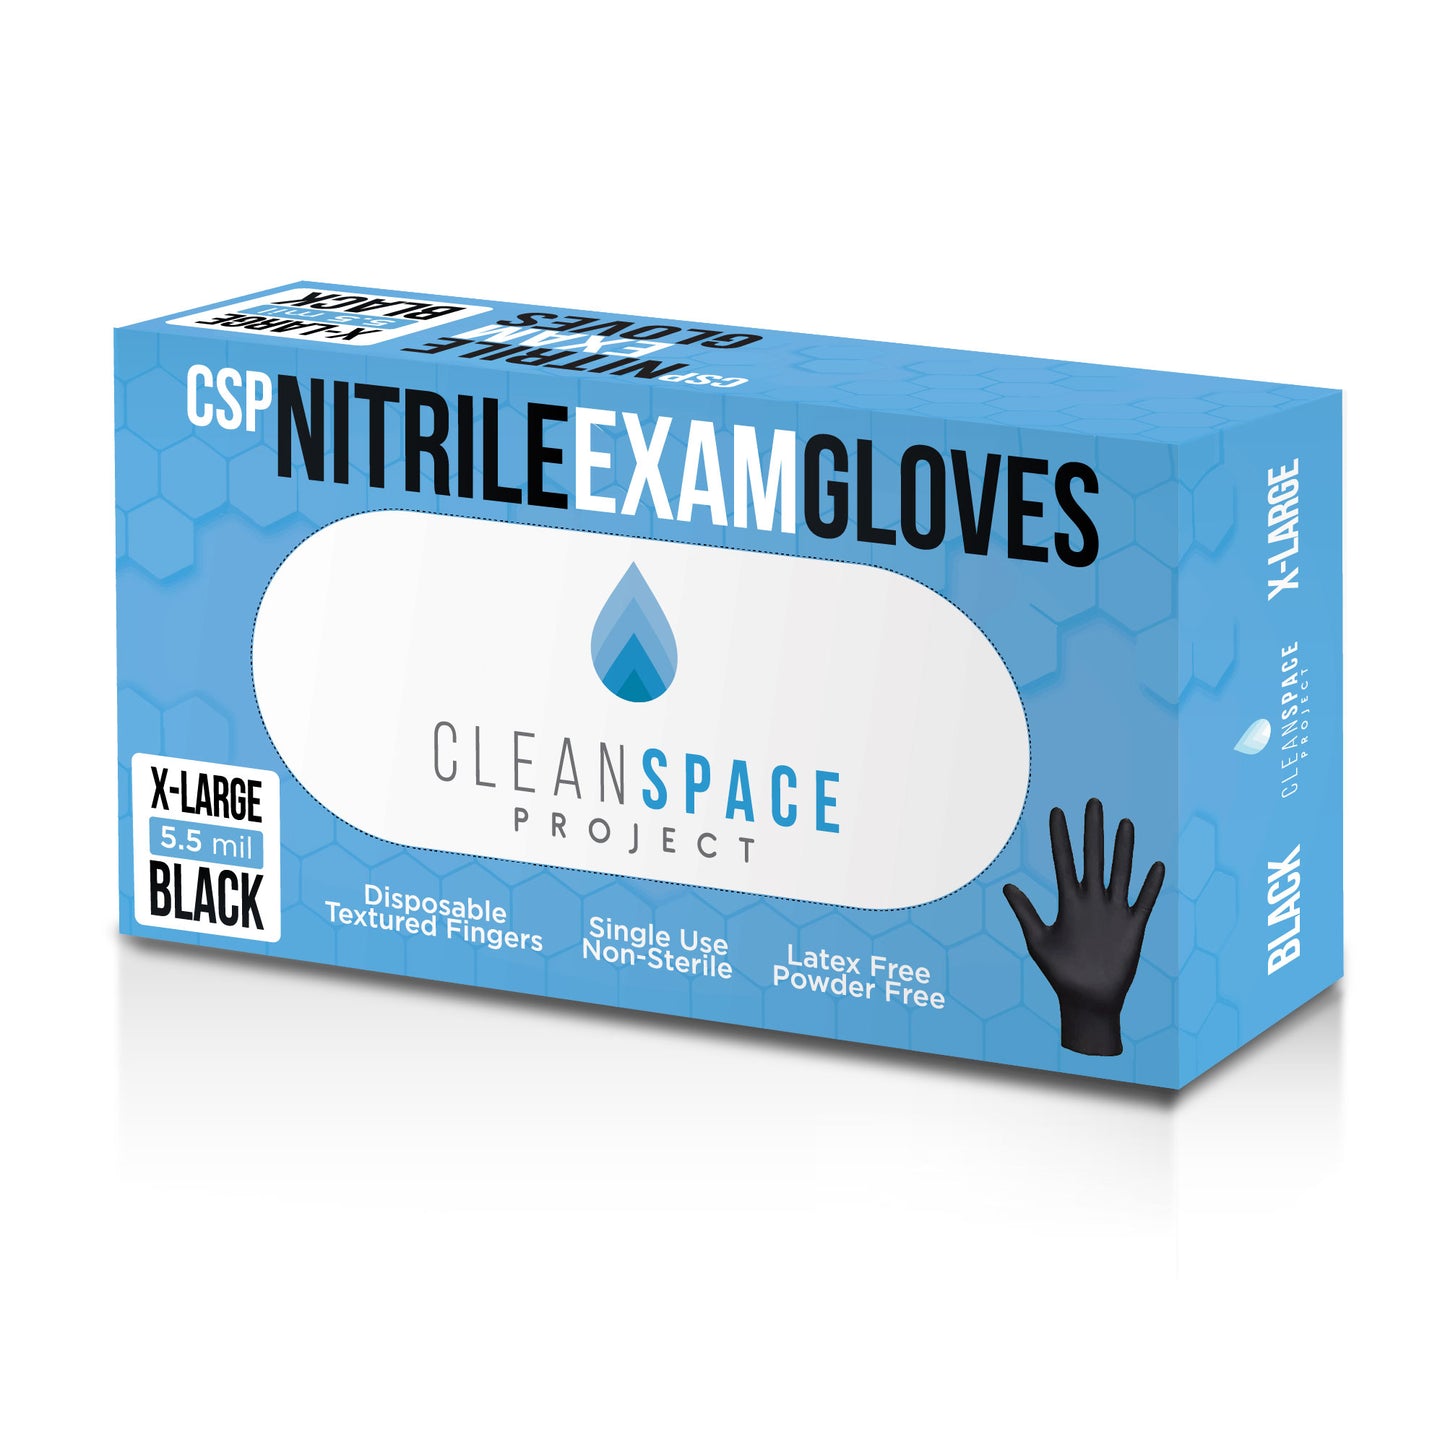 CSP Nitrile Gloves-5.5 mil black